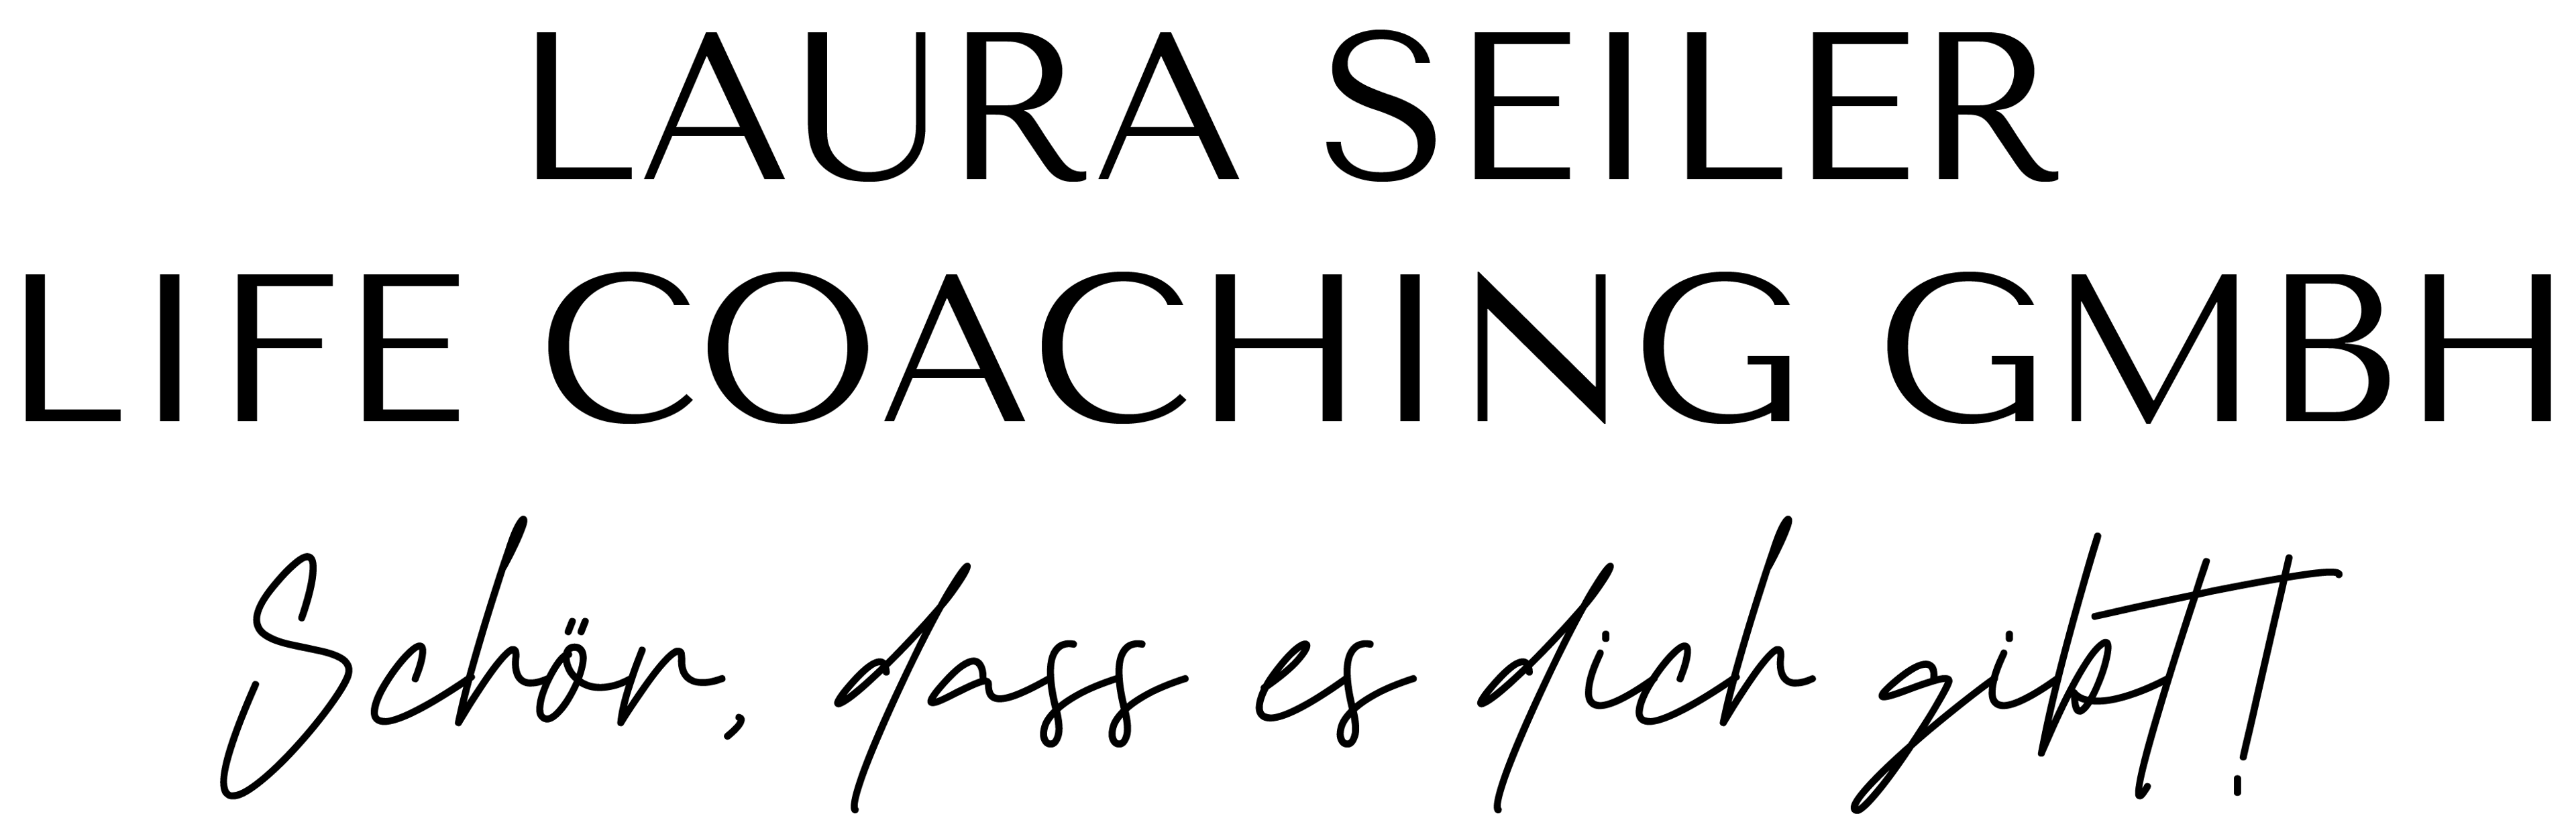 Laura Seiler Life Coaching GmbH Logo